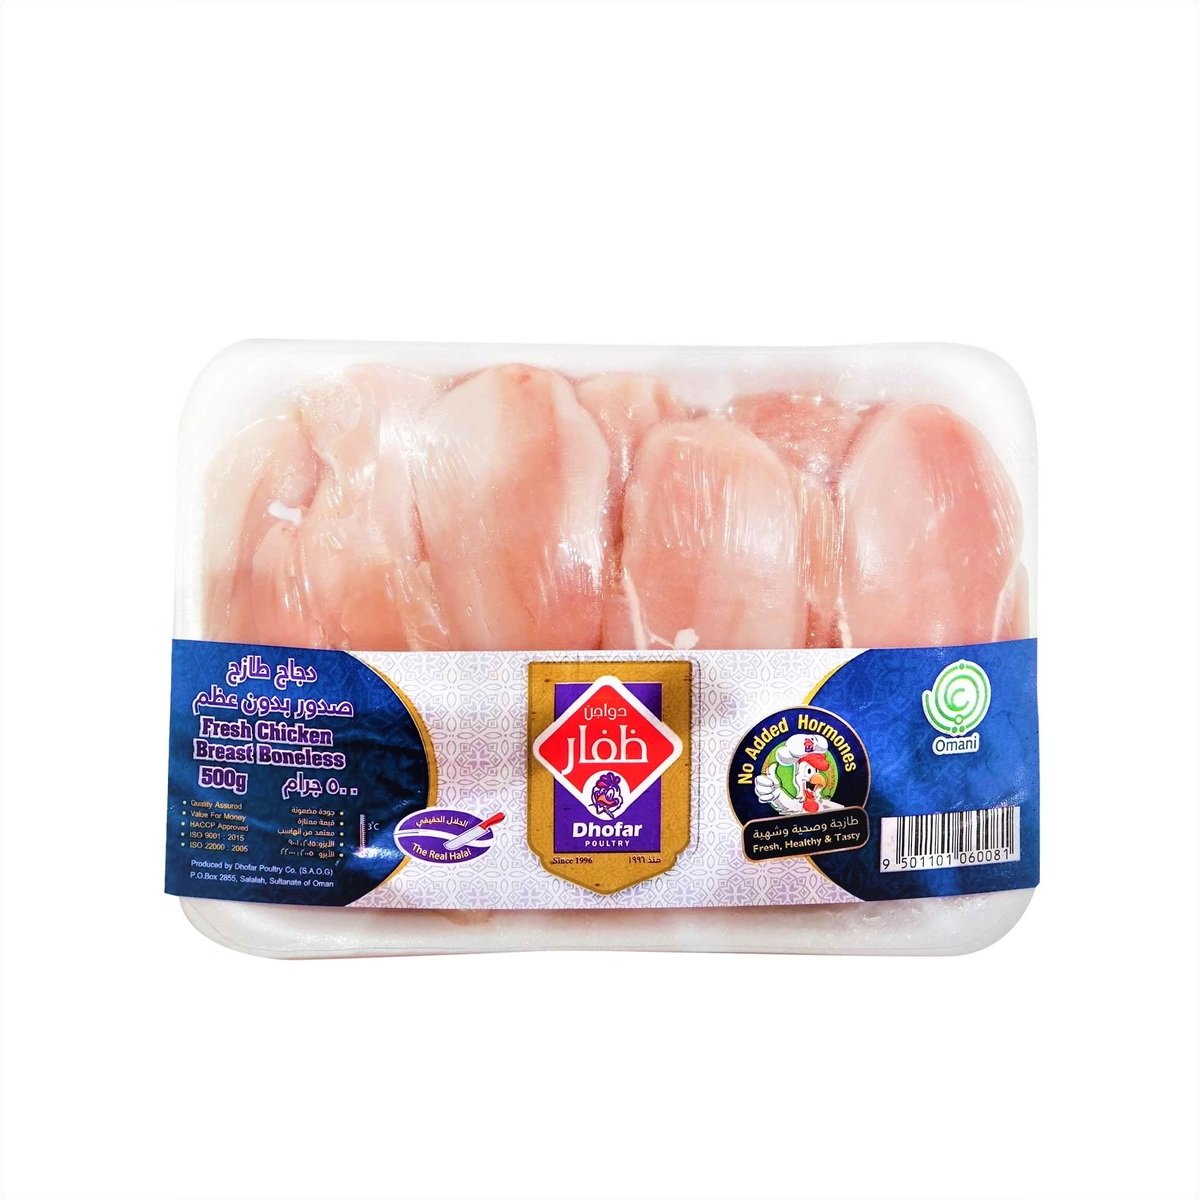 Dhofar Fresh Chicken Breast Boneless 500g